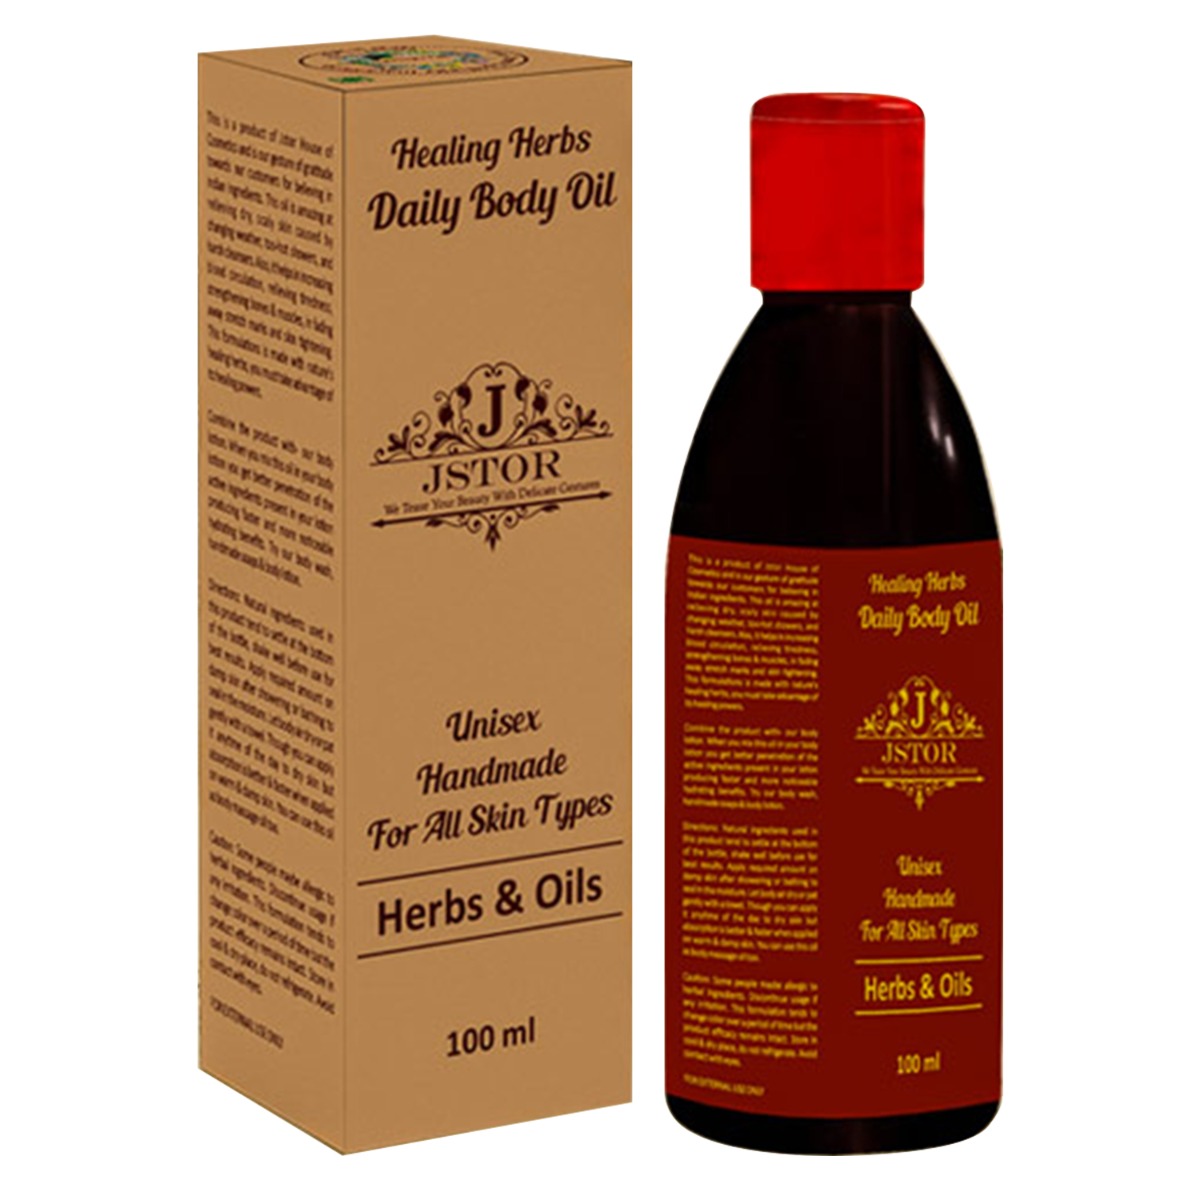 JSTOR Healing Herbs Daily Body Oil, 100ml